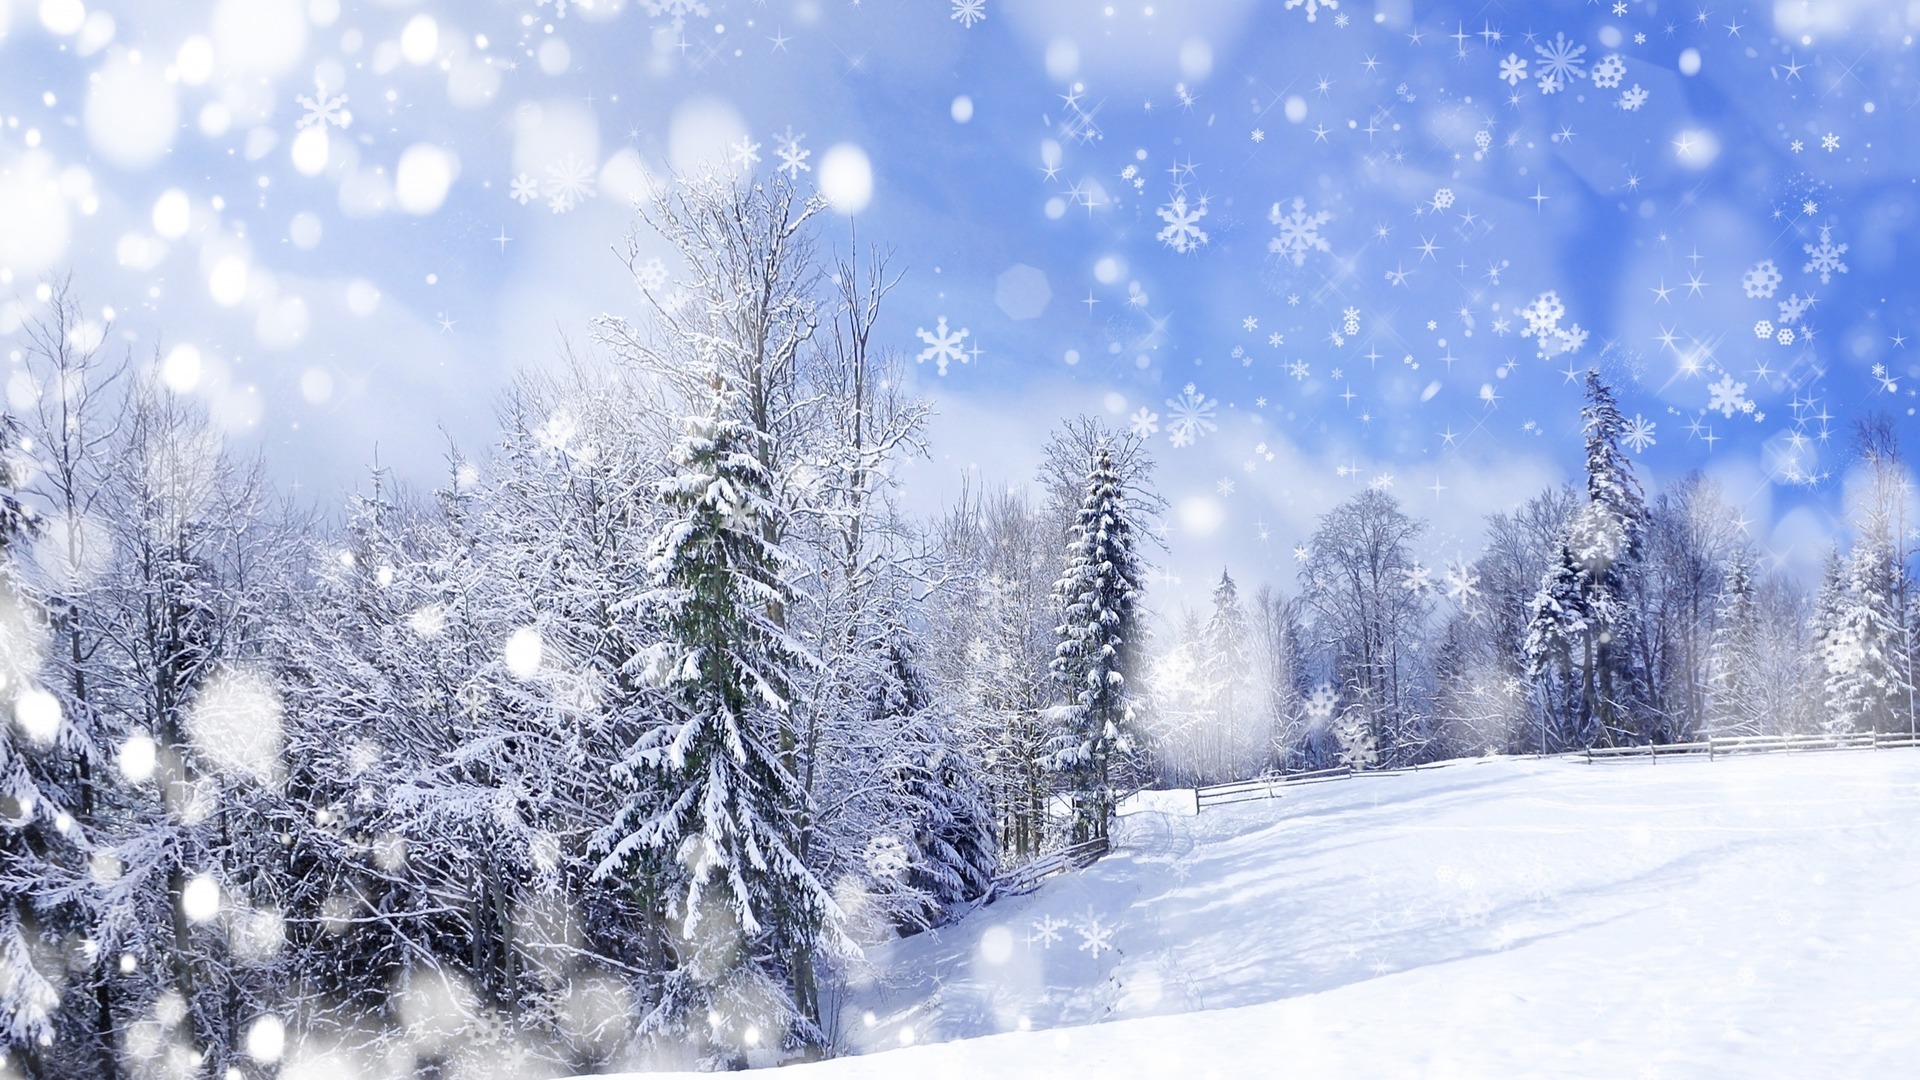 fir trees, landscape, winter, trees, snow, blue